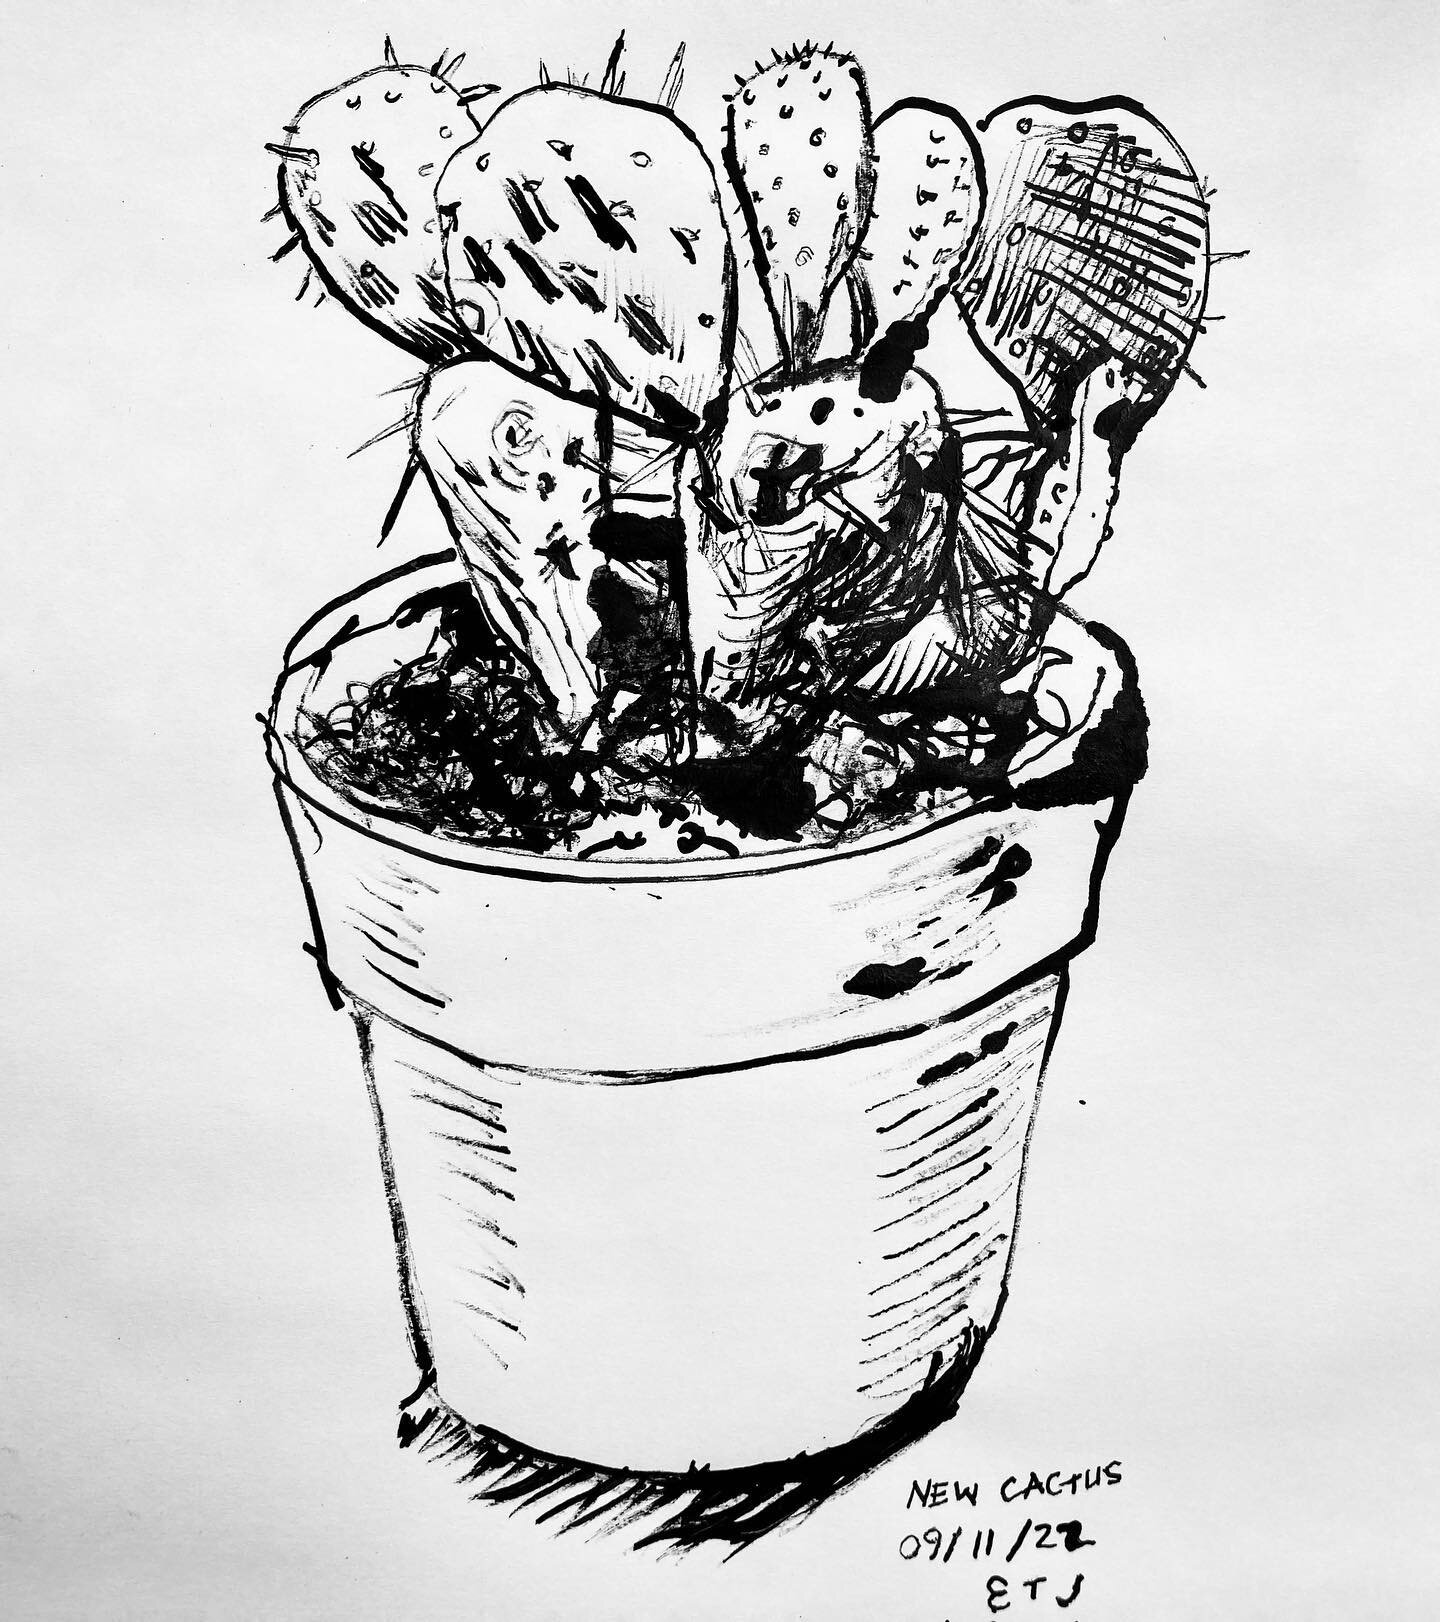 new cactus drawn w a stick

#sketch #sketchbook #ink #inkdrawing #sketchbook #cactus #succulents #priclypear